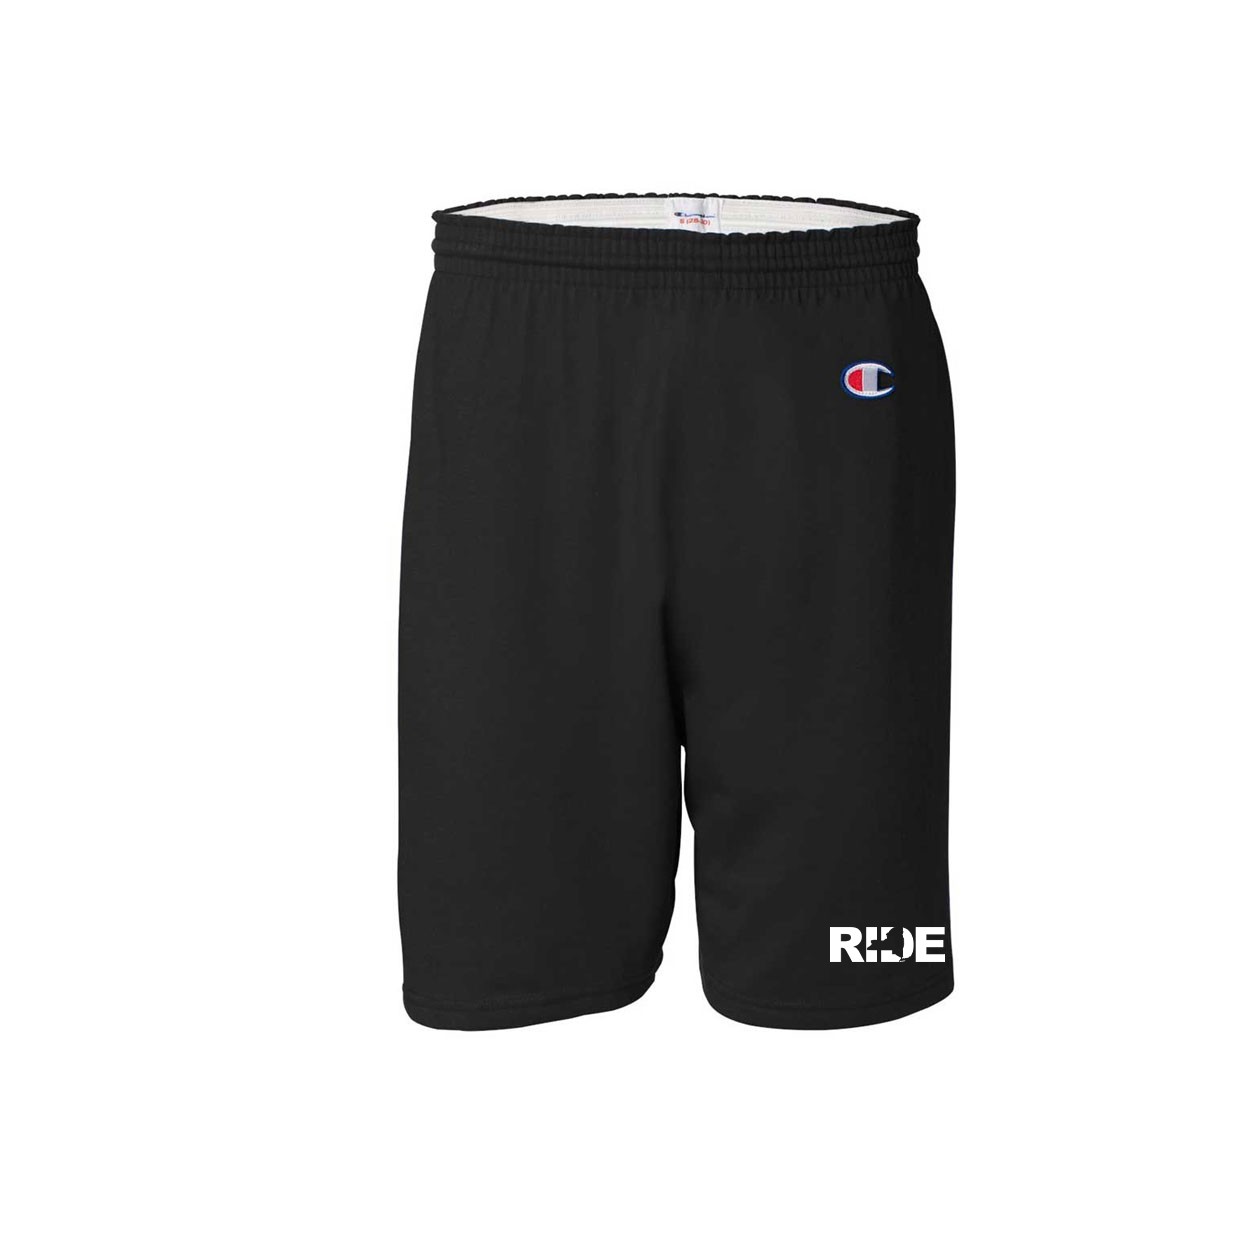 Ride New York Classic Men's Unisex Gym Shorts Black with Pockets Black (White Logo)